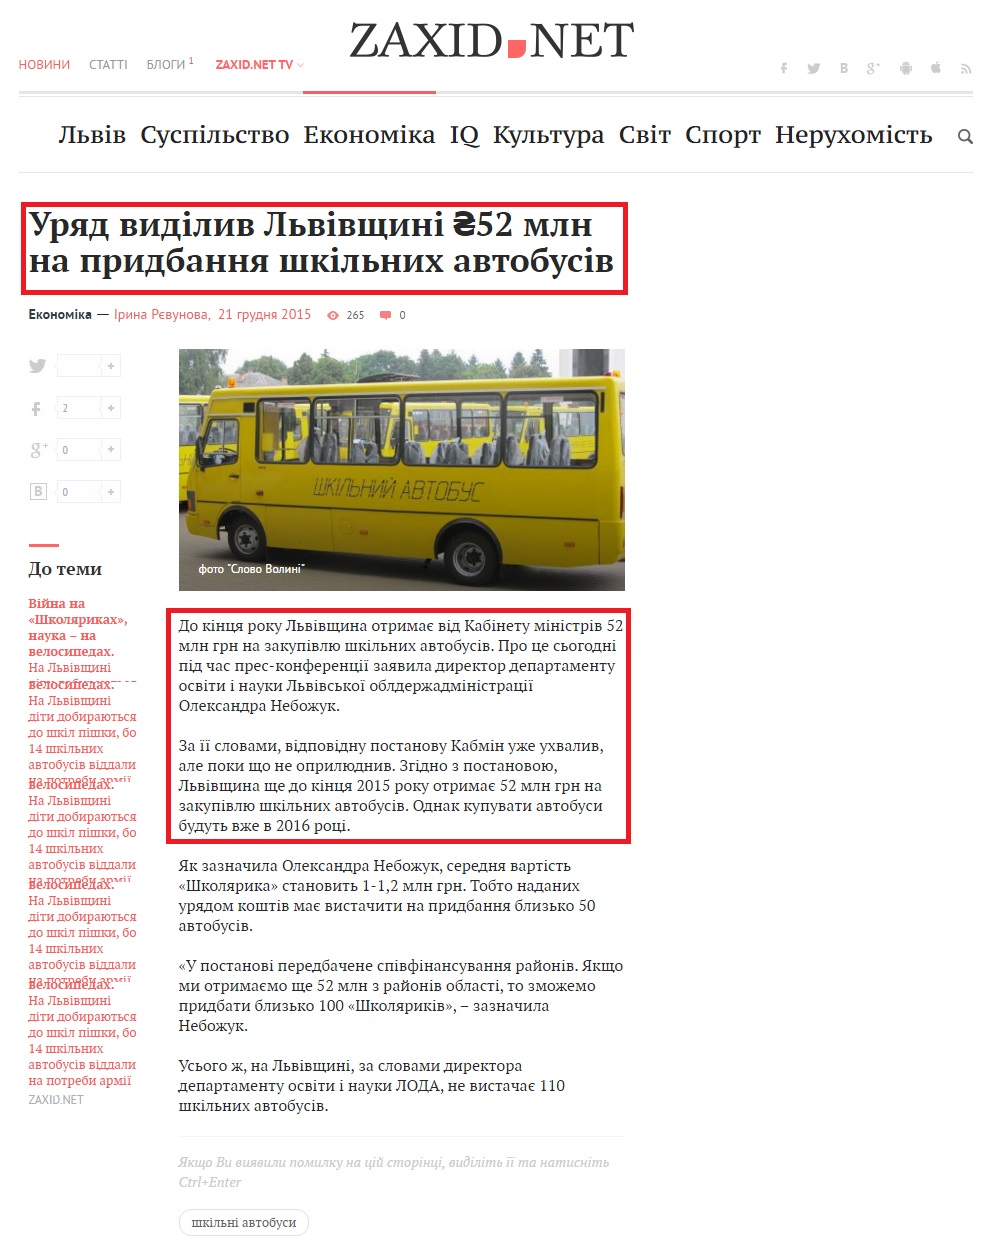 http://zaxid.net/news/showNews.do?uryad_vidiliv_lvivshhini_52_mln_na_pridbannya_shkilnih_avtobusiv&objectId=1377119